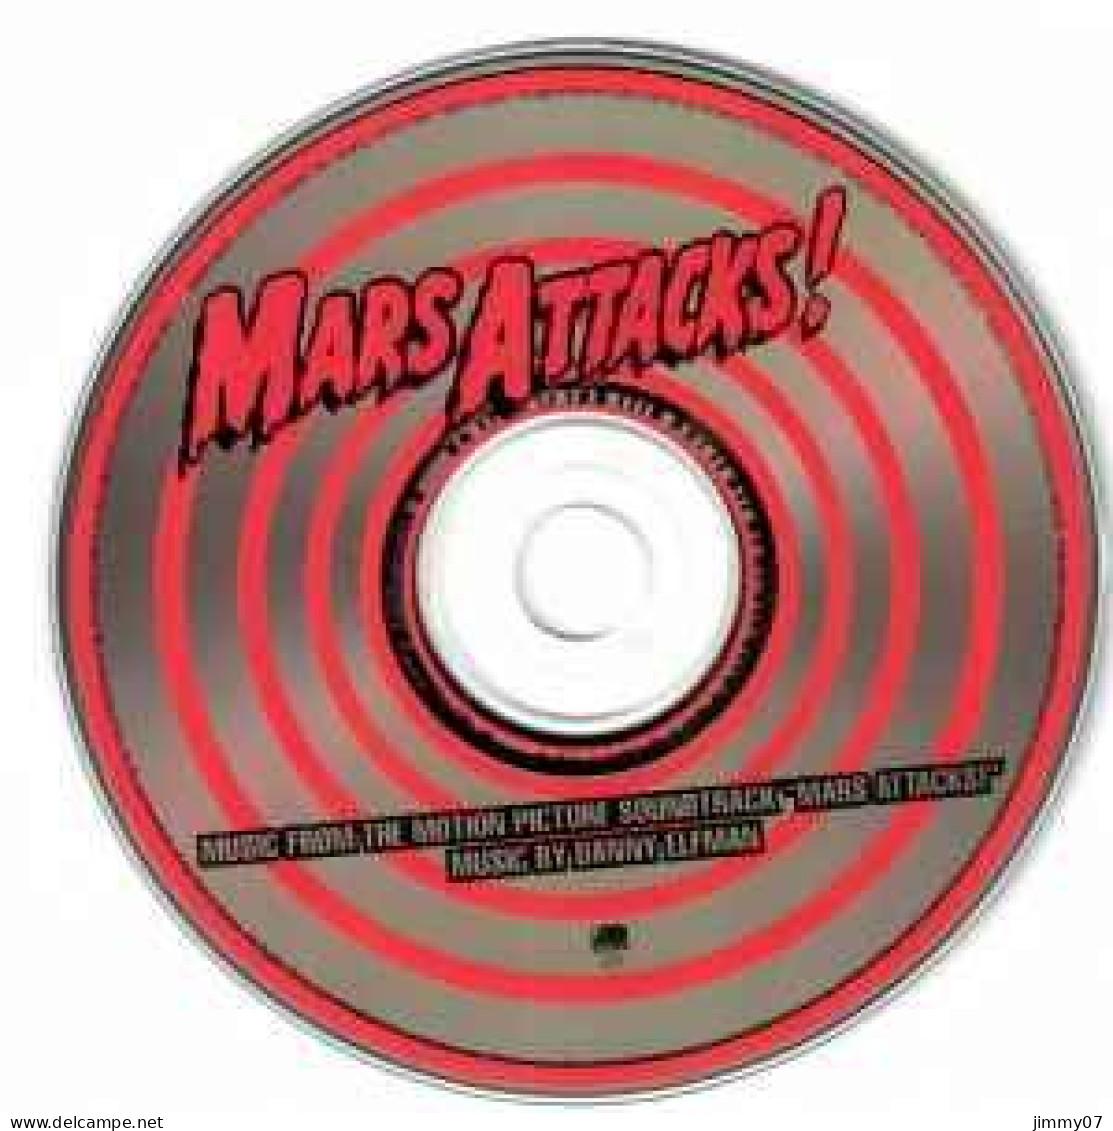 Danny Elfman - Mars Attacks! (Music From The Motion Picture Soundtrack) (CD, Album) - Musica Di Film